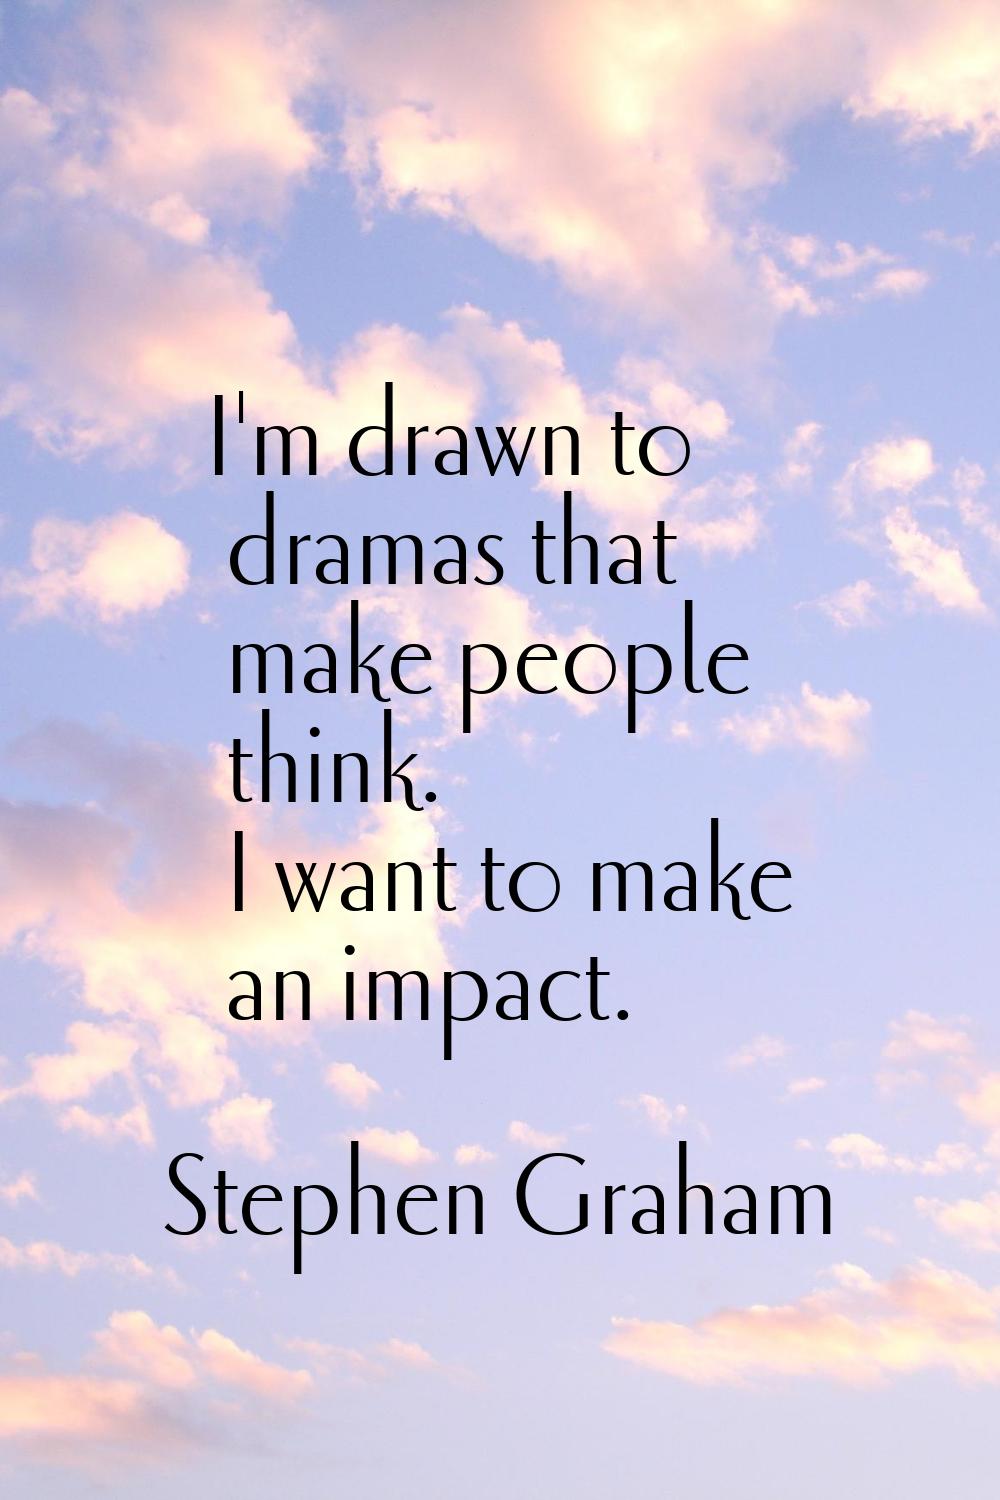 I'm drawn to dramas that make people think. I want to make an impact.